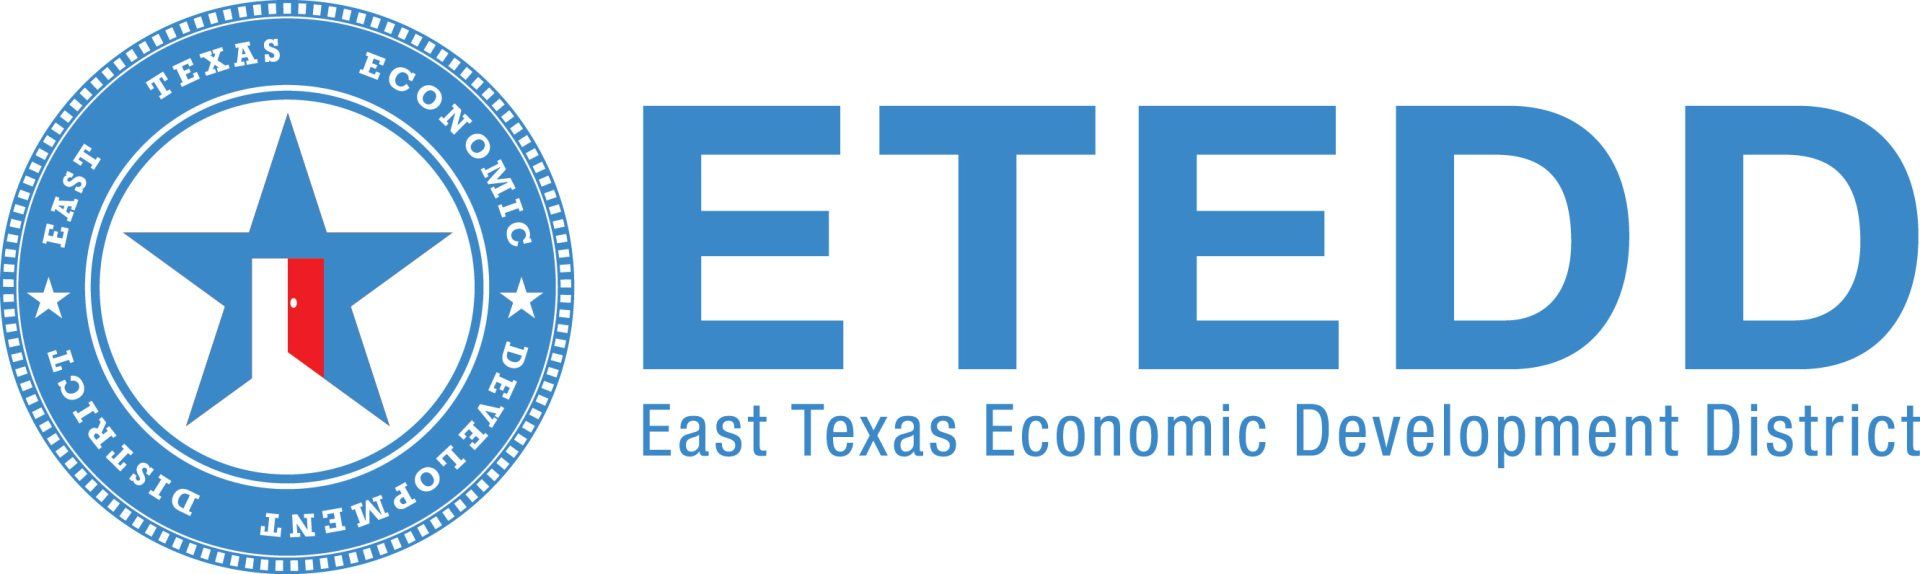 East Texas Economic Development District logo